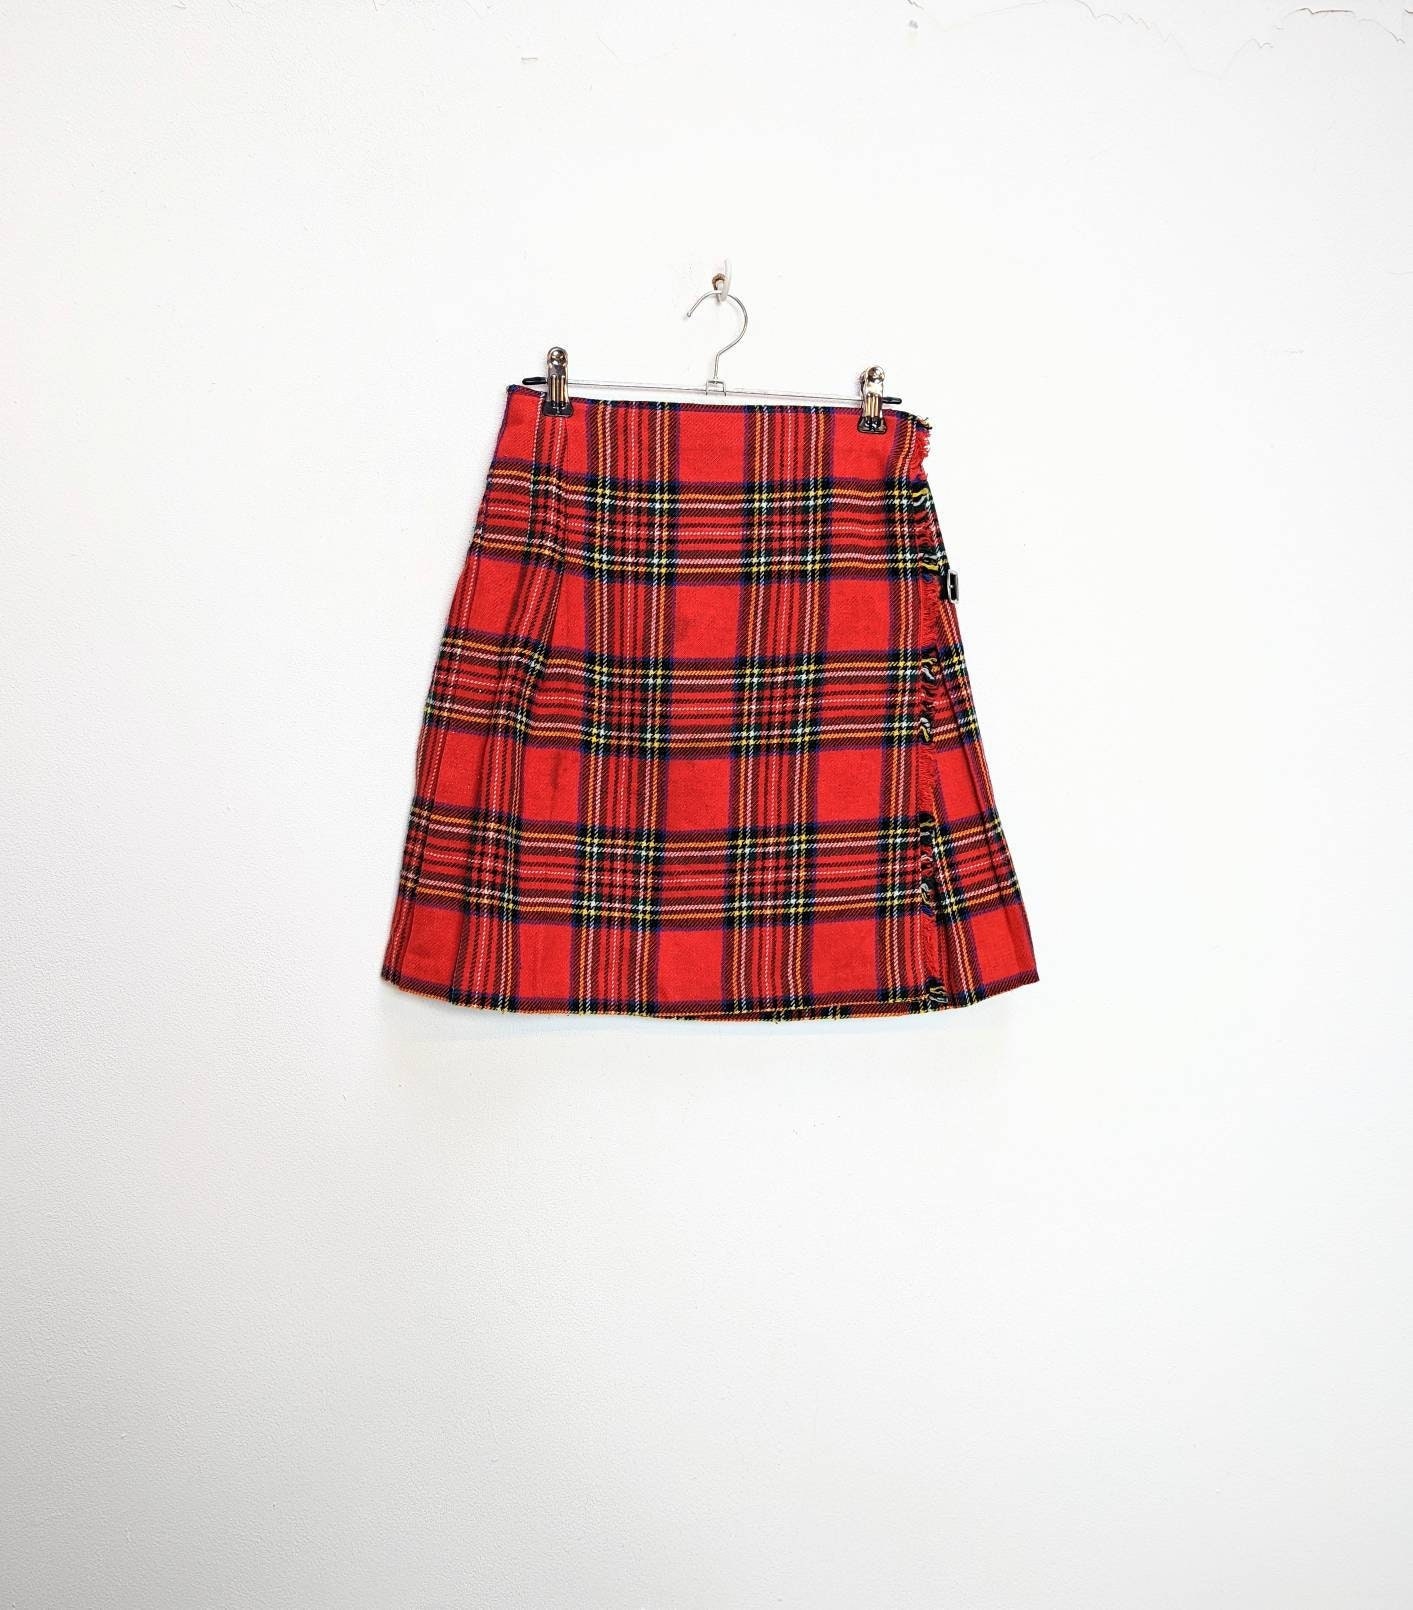 Red Plaid Mini-skirt Vintage Mini-skirt XS Plaid Skirt Red Check